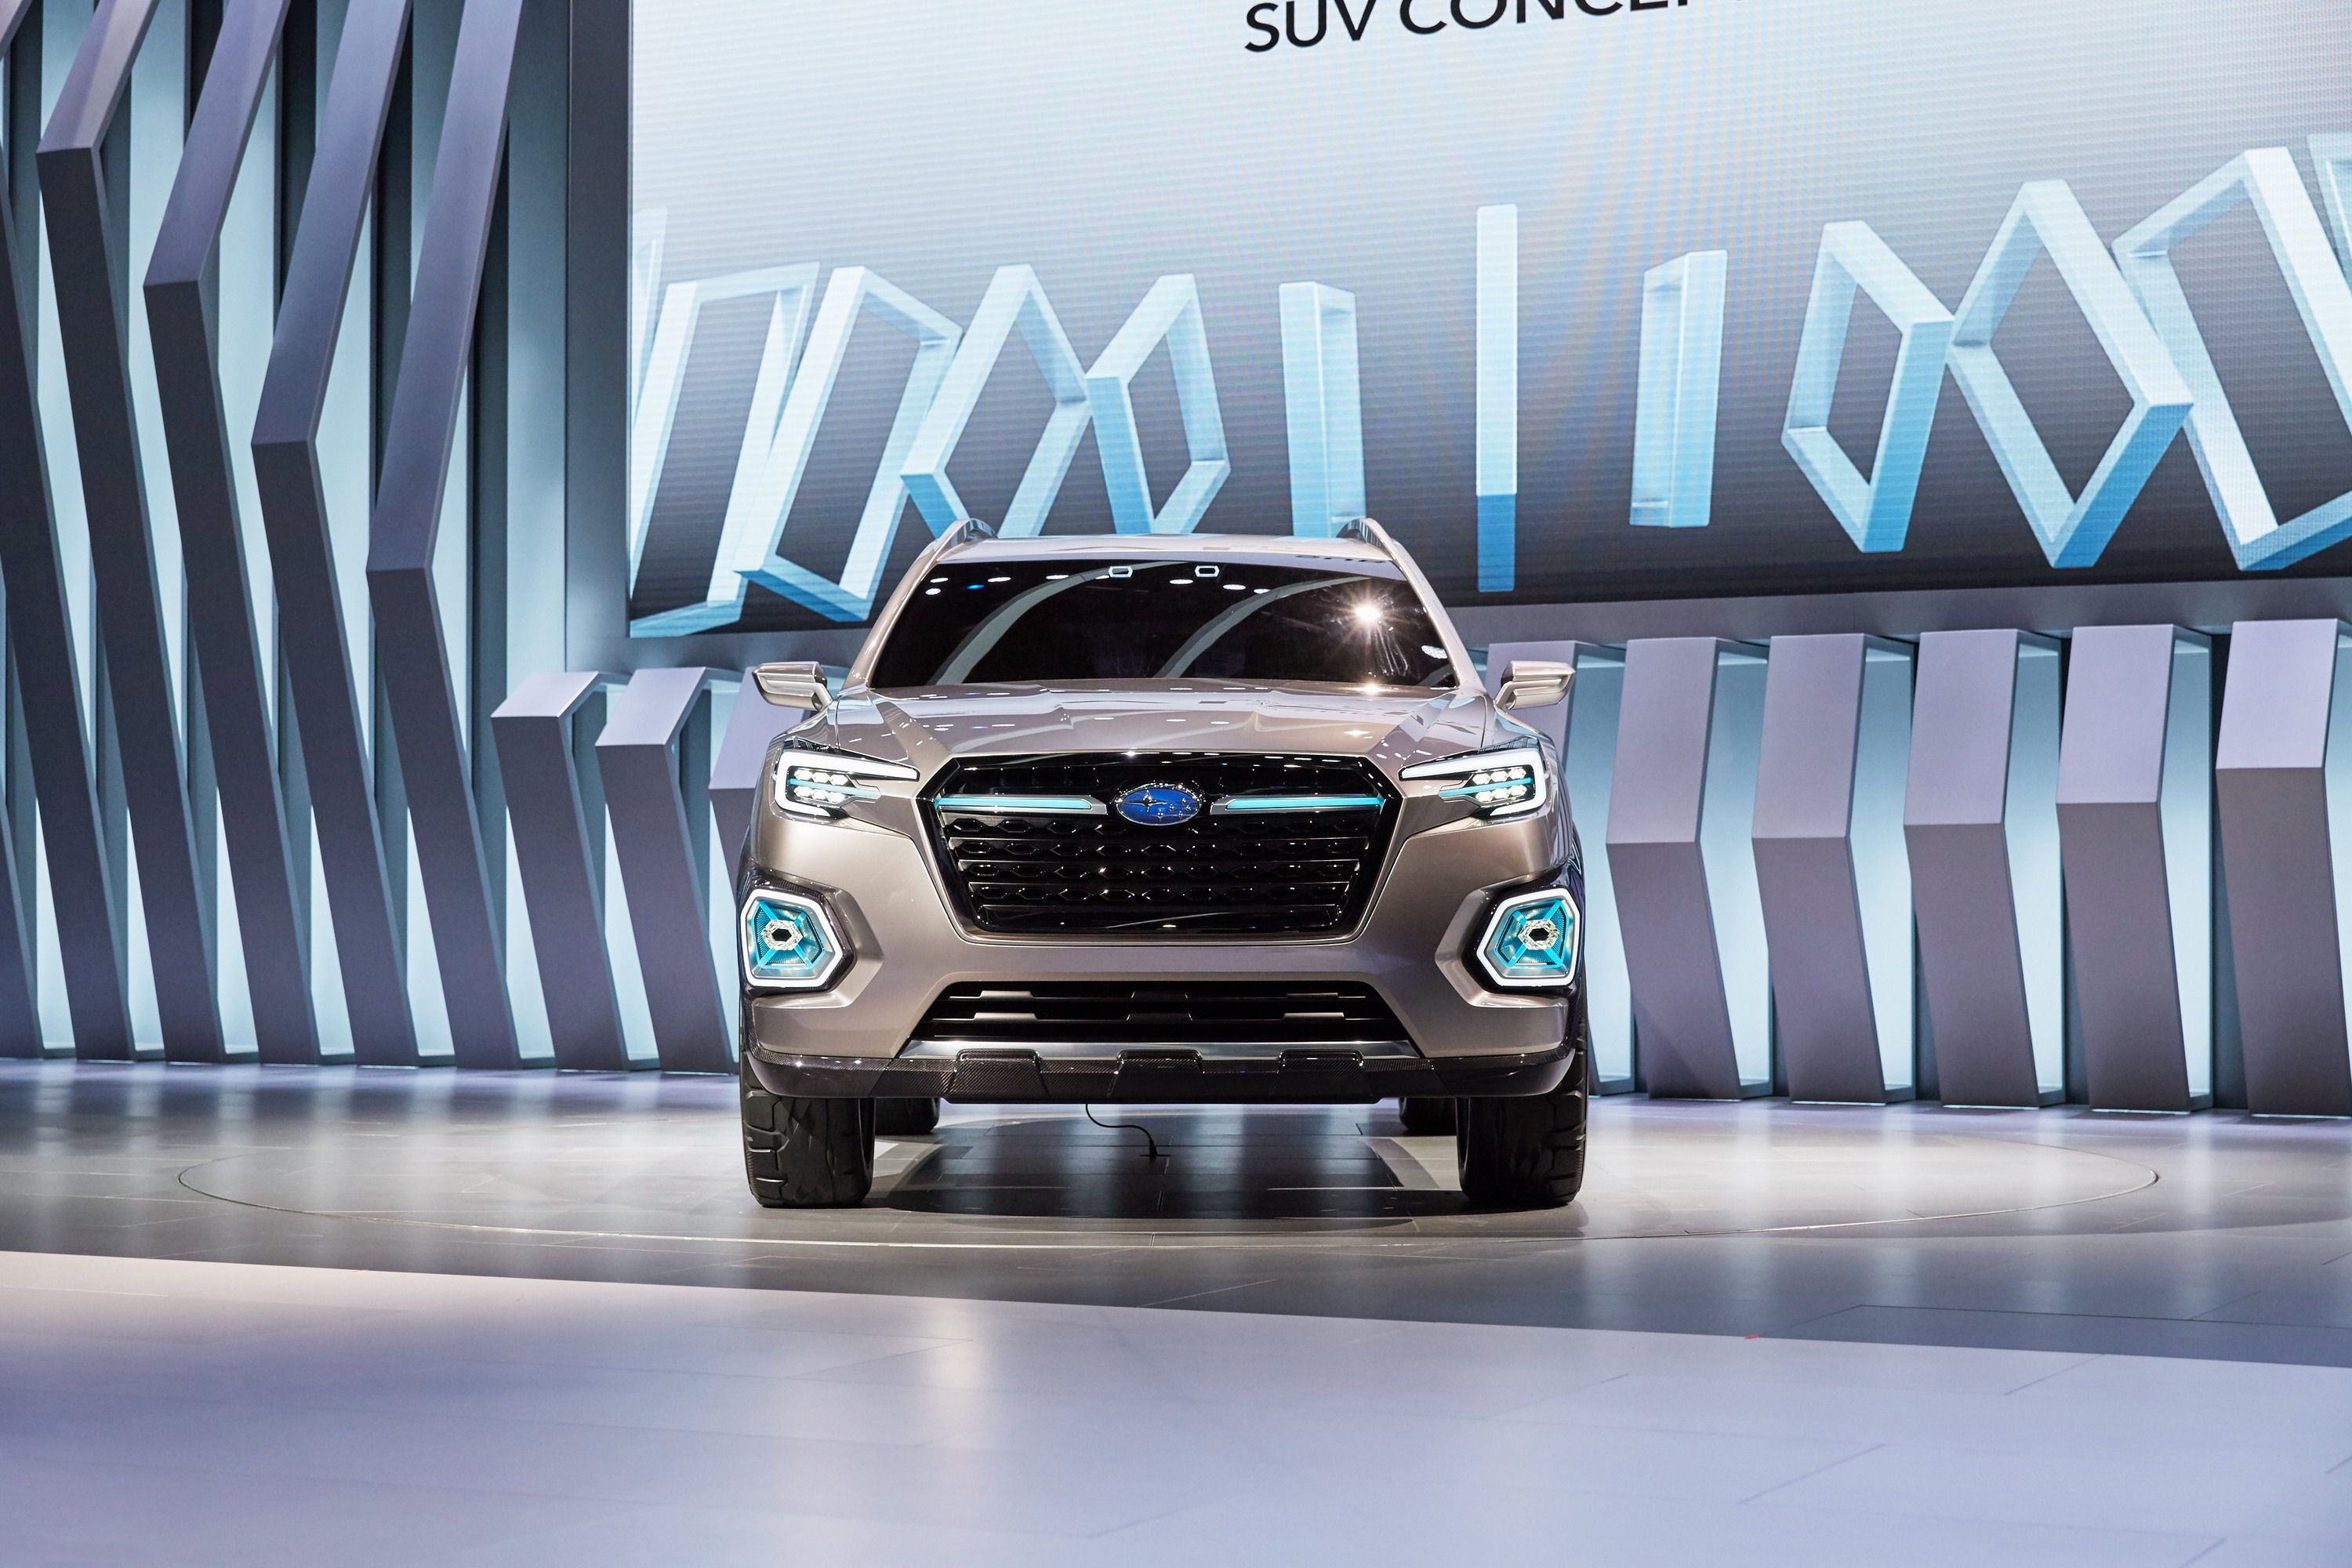 2017 Subaru VIZIV-7 SUV Concept